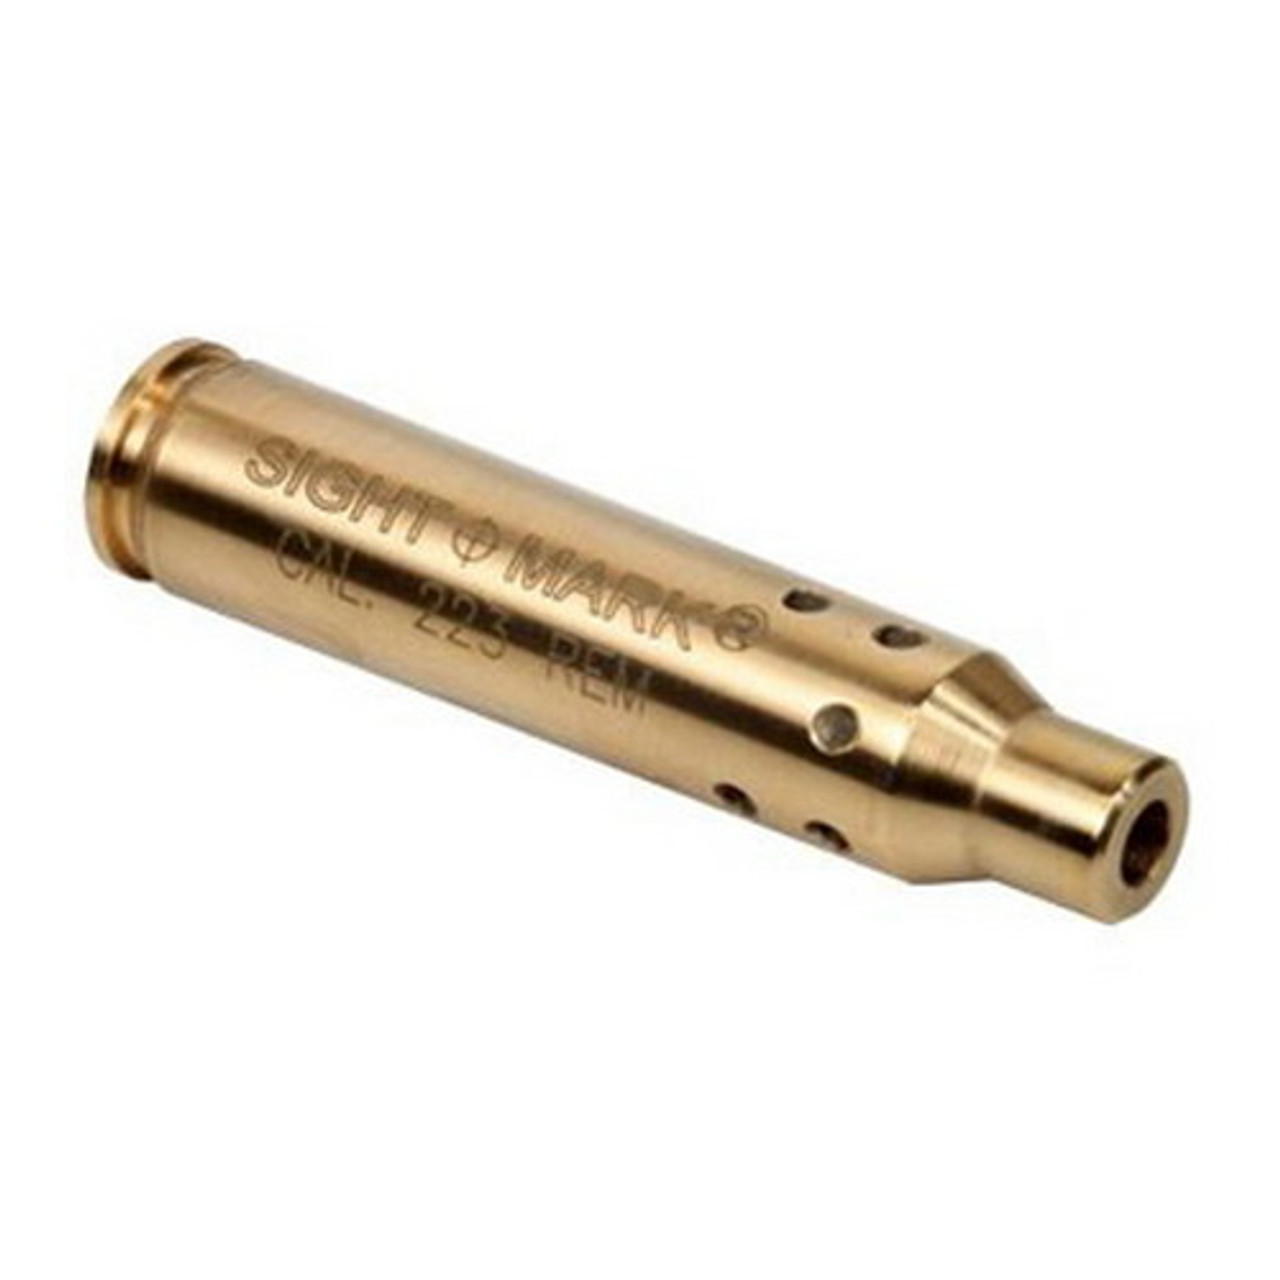 Sightmark SM39007 Boresight Red Laser 12 Gauge Brass